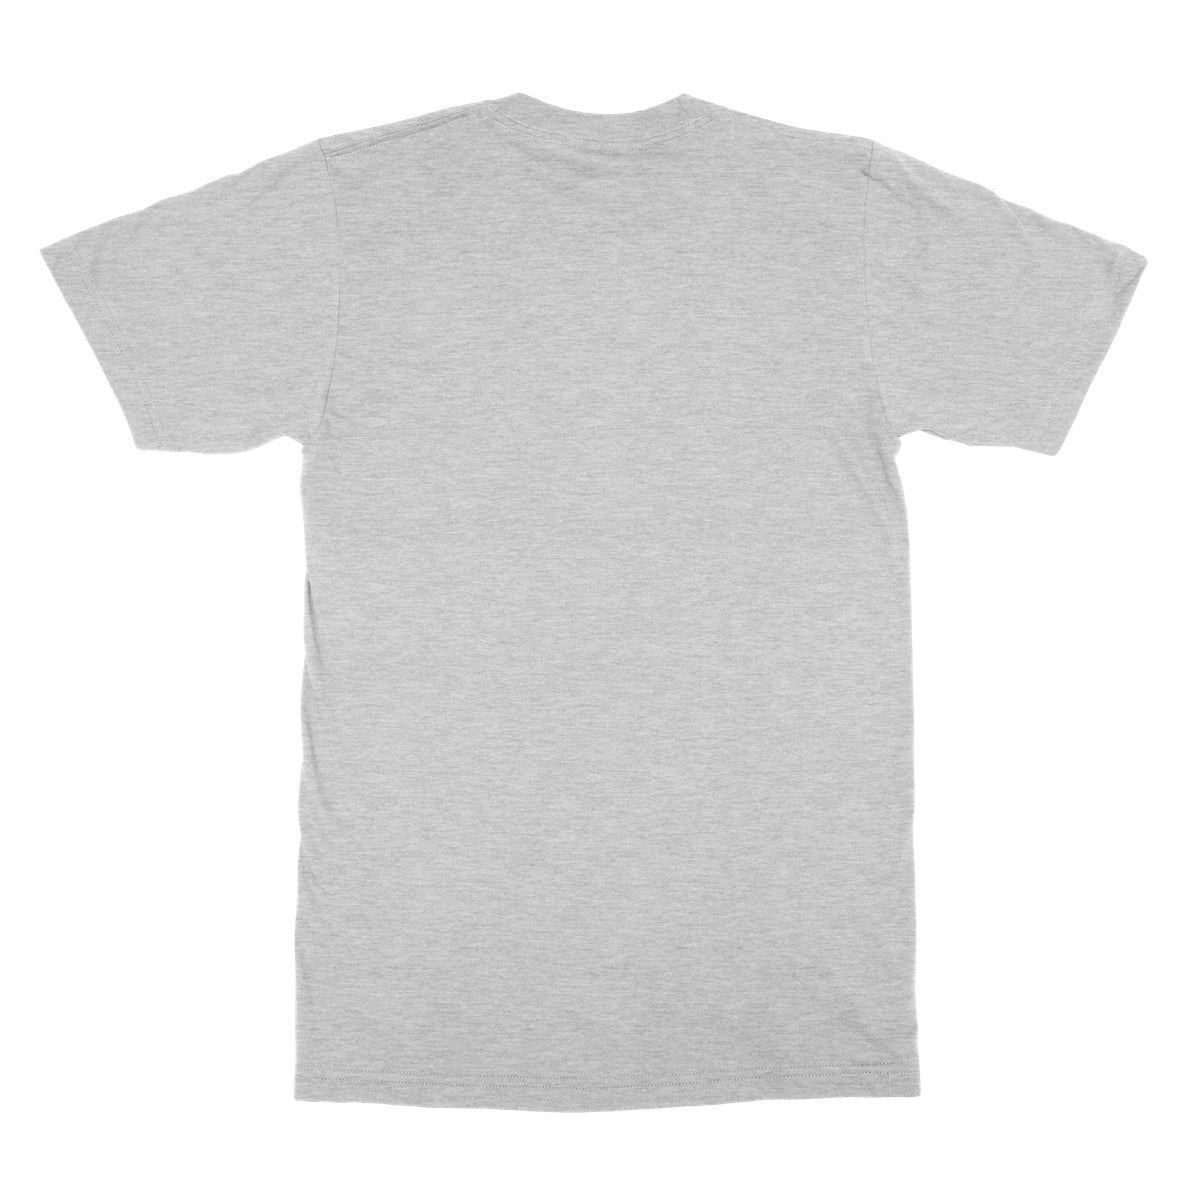 Shad Gaspard  Beast CxE Softstyle T-Shirt